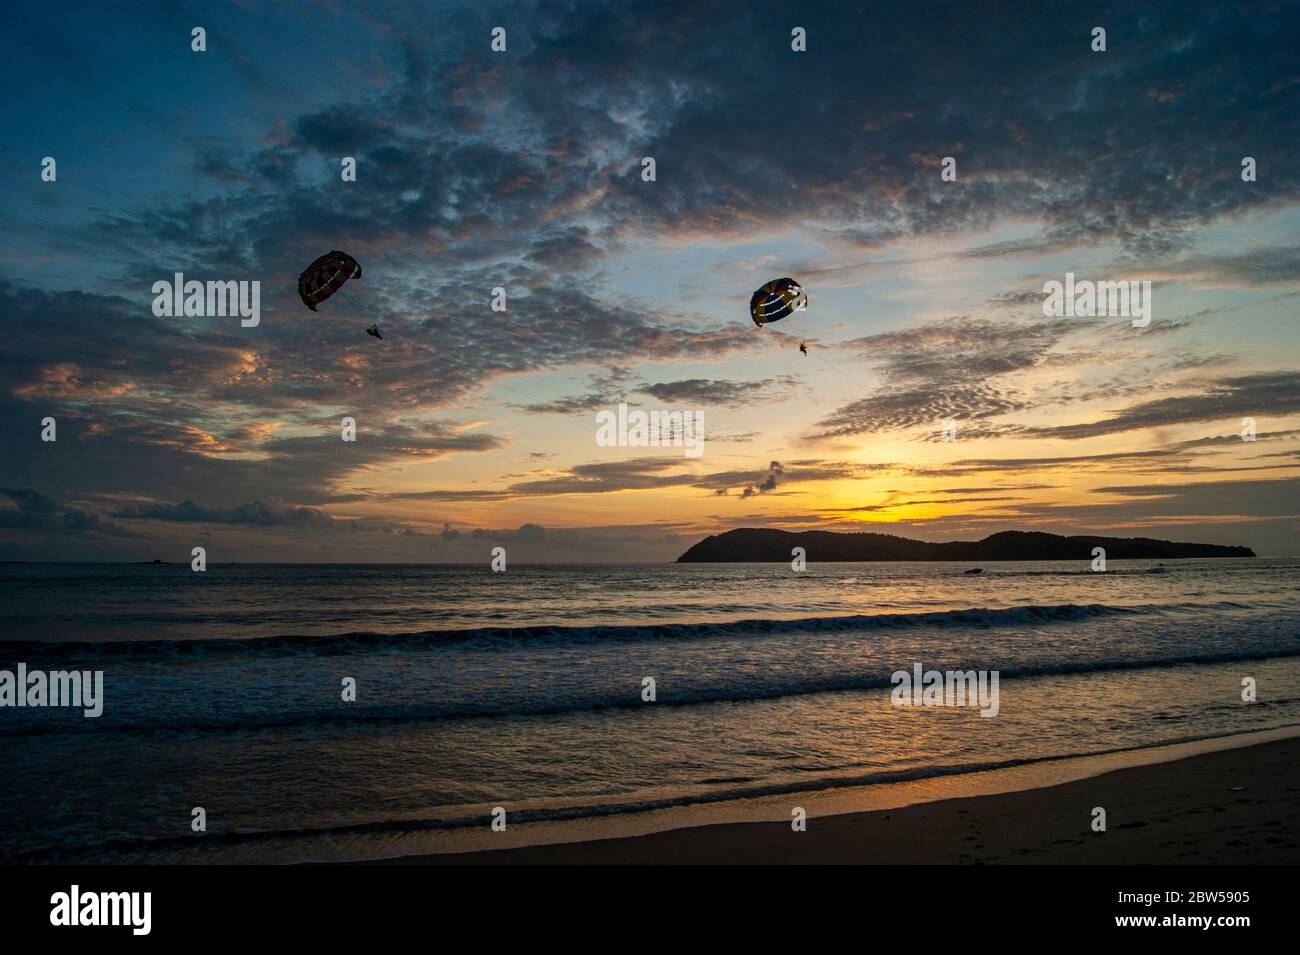 Parachuting at Sunset Across the Island Stock Photo